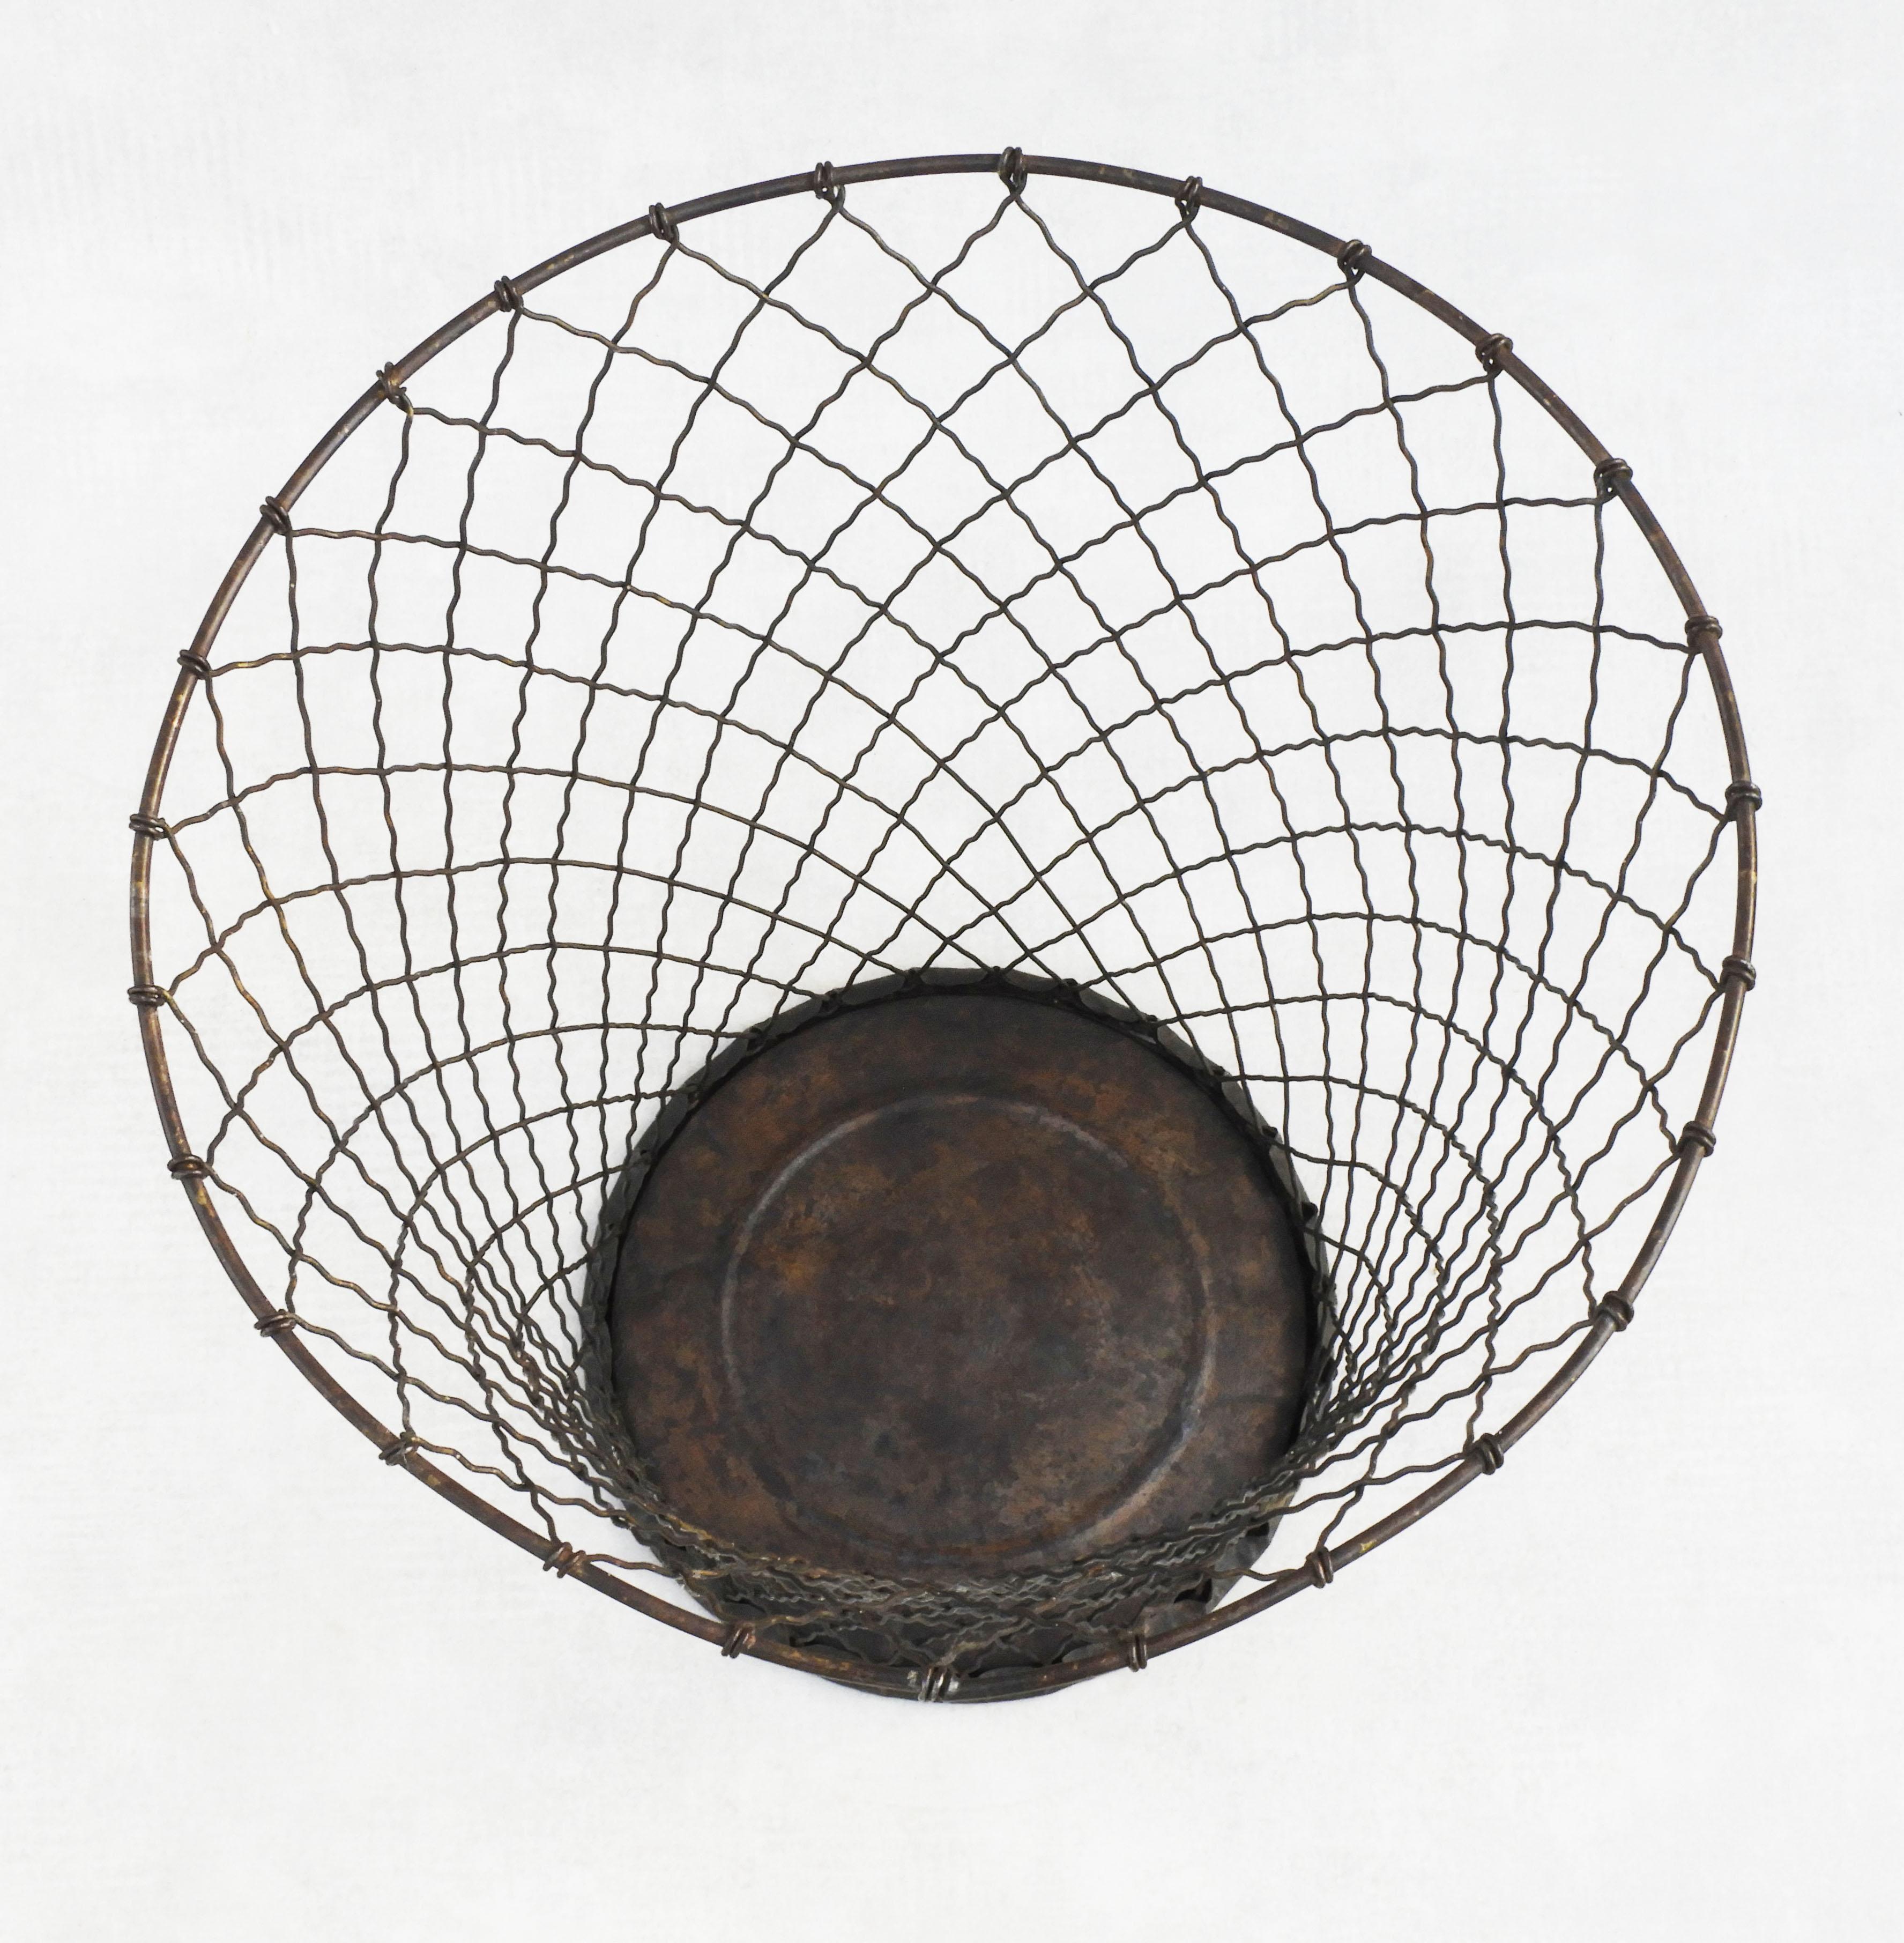 20th Century Woven Wire Waste Paper Basket, c1950